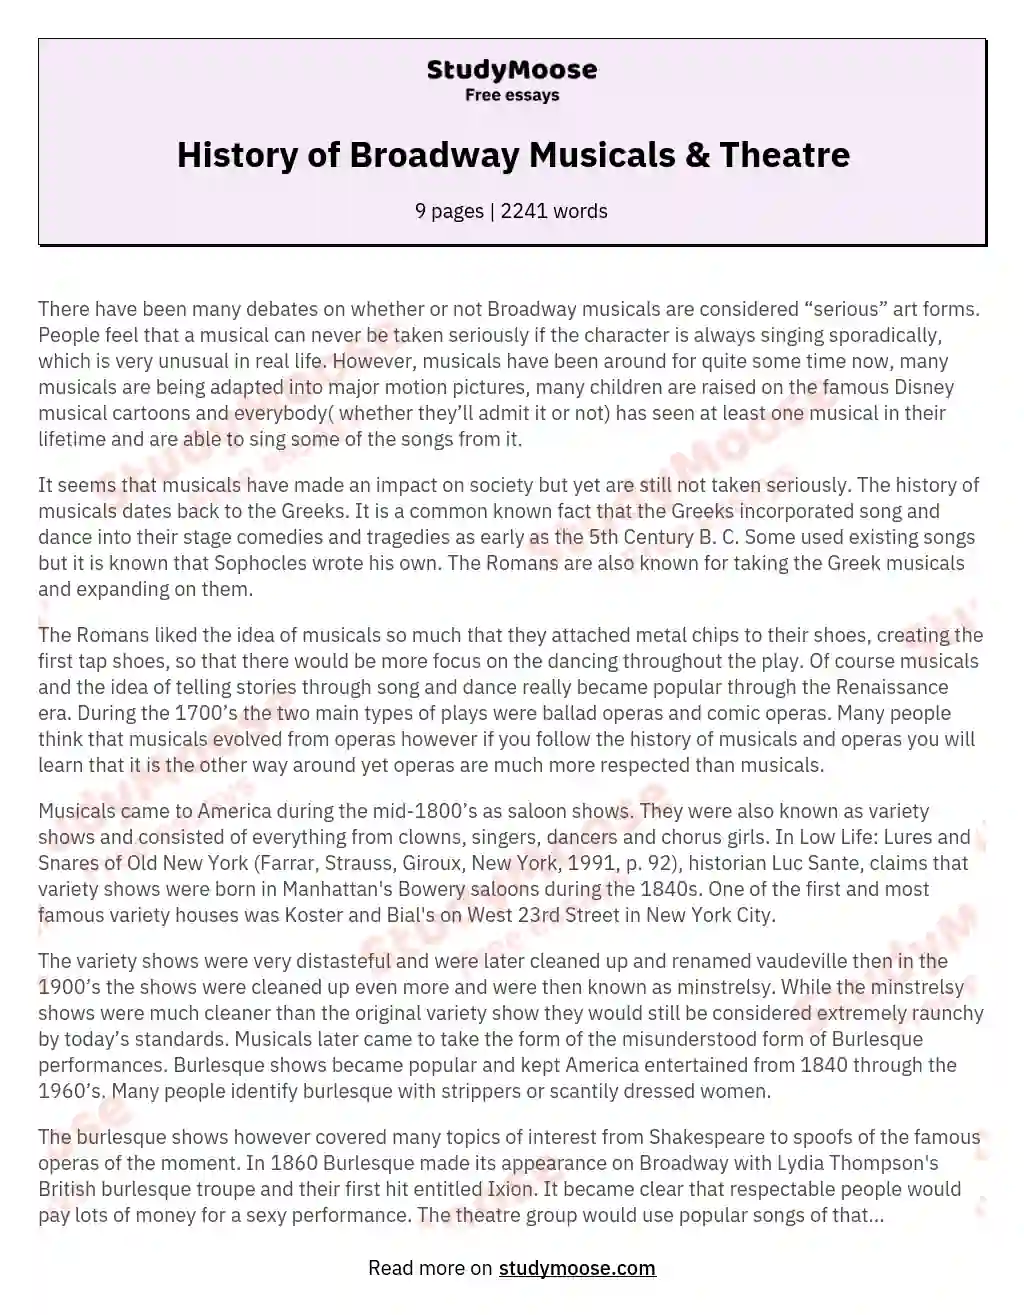 History of Broadway Musicals & Theatre essay